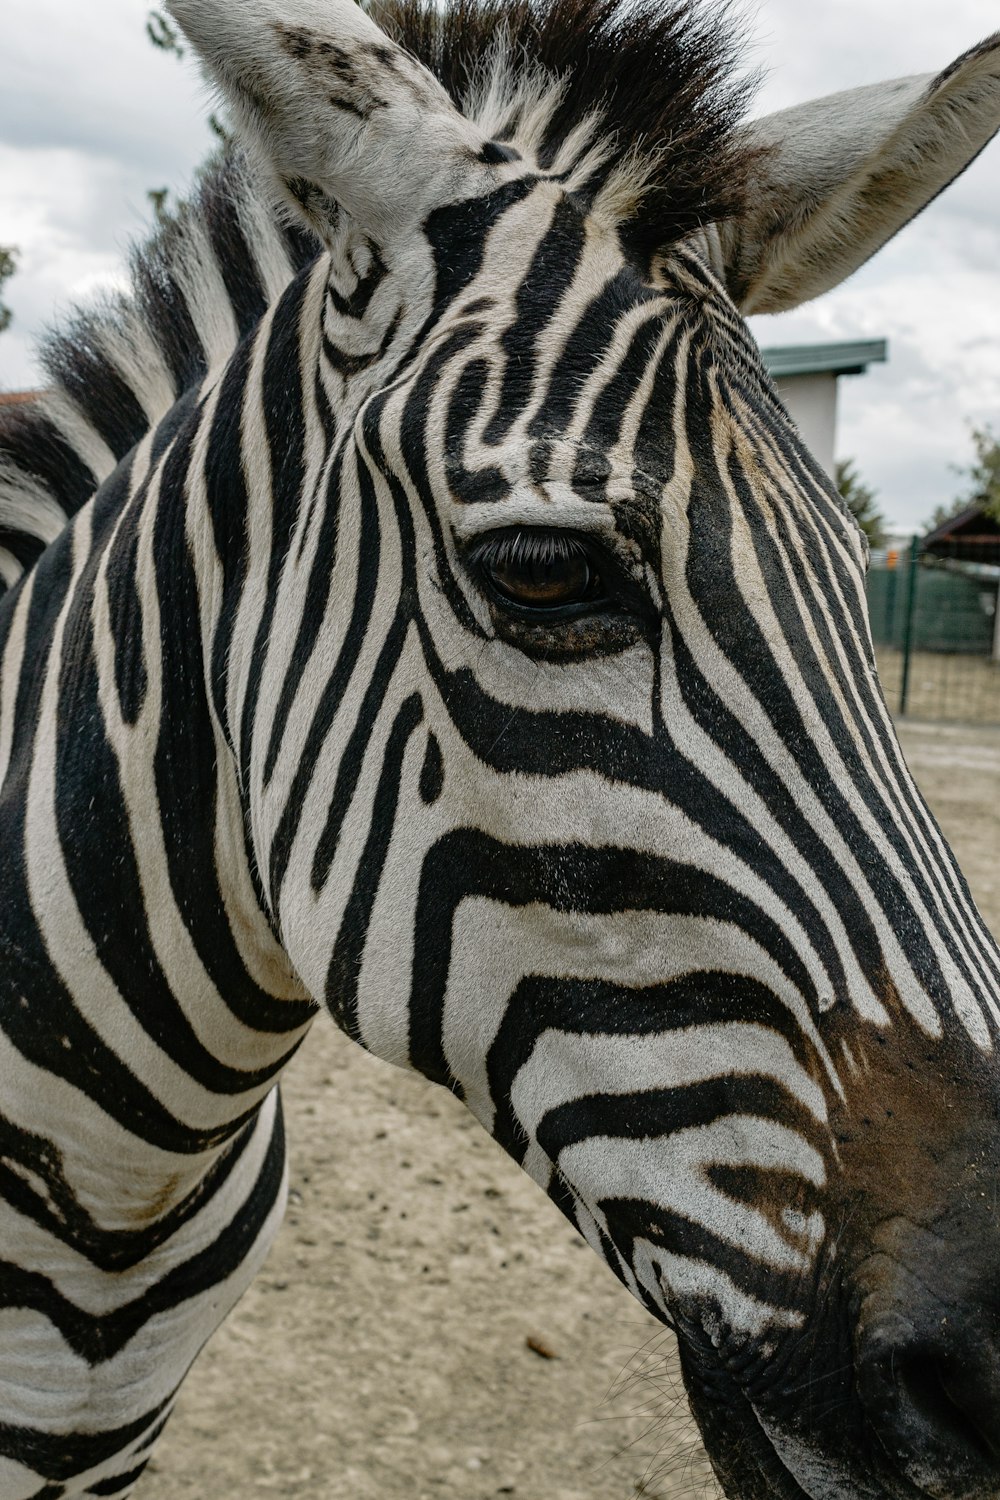 a close up of a zebra on a dirt ground